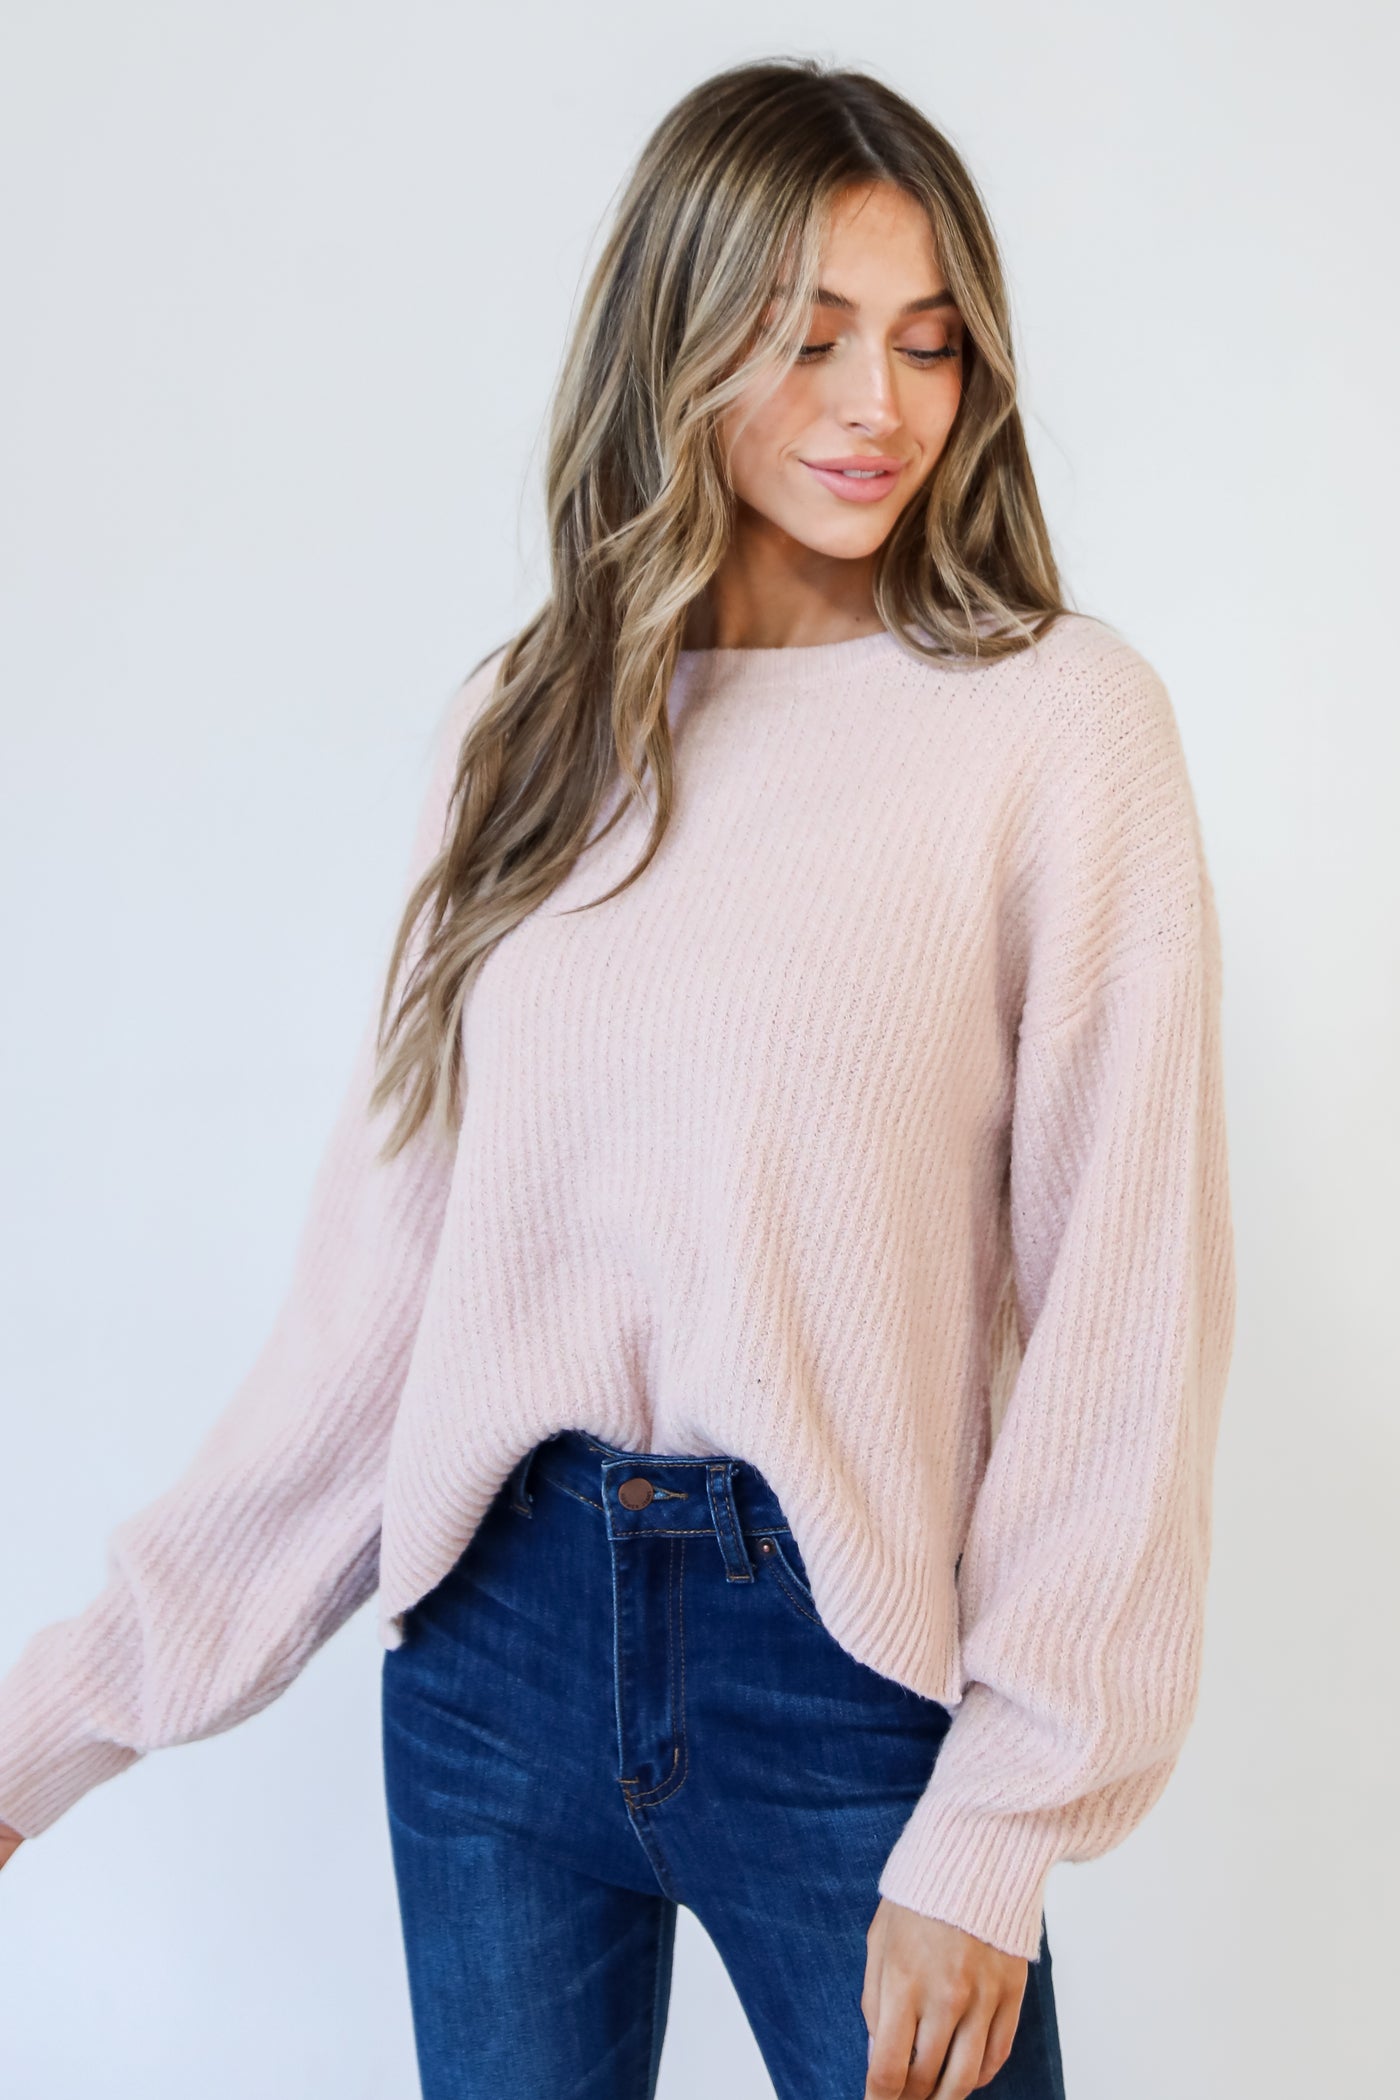 light pink Sweater on dress up model